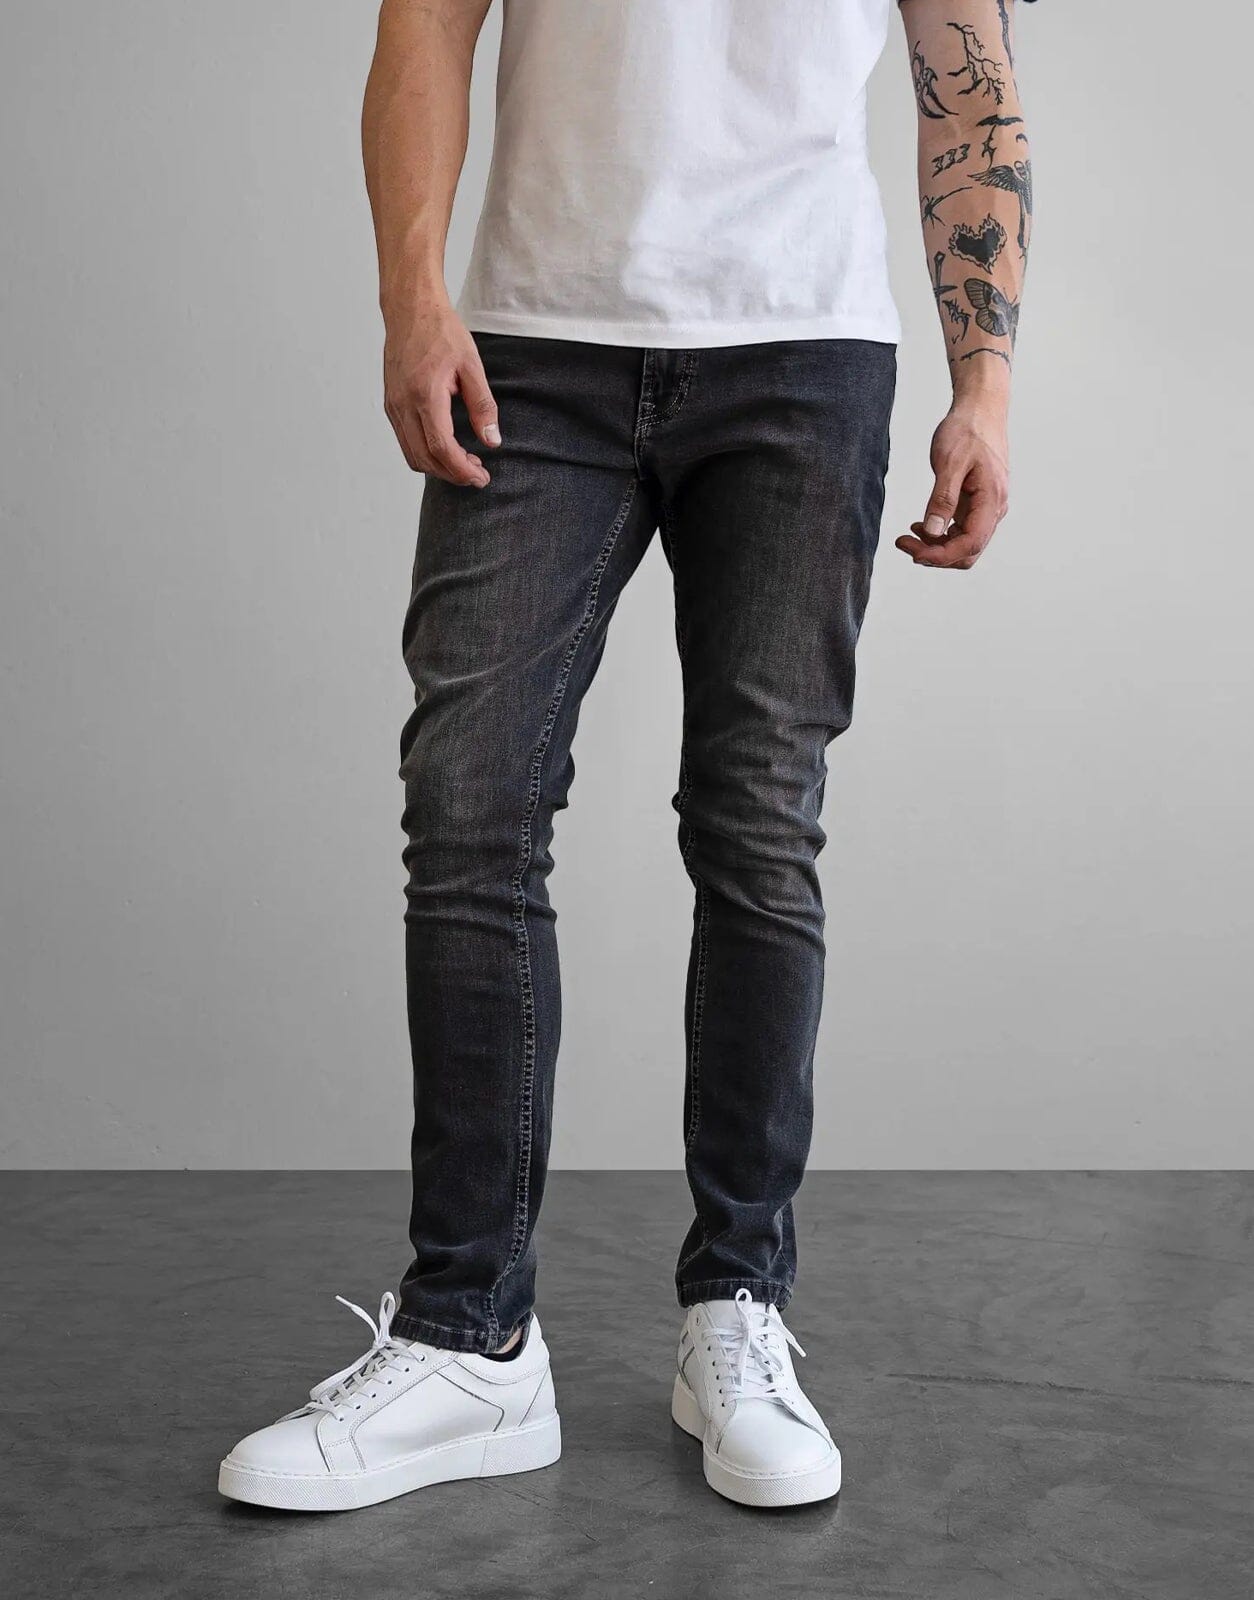 Fade Core Slate Black Jeans - Subwear